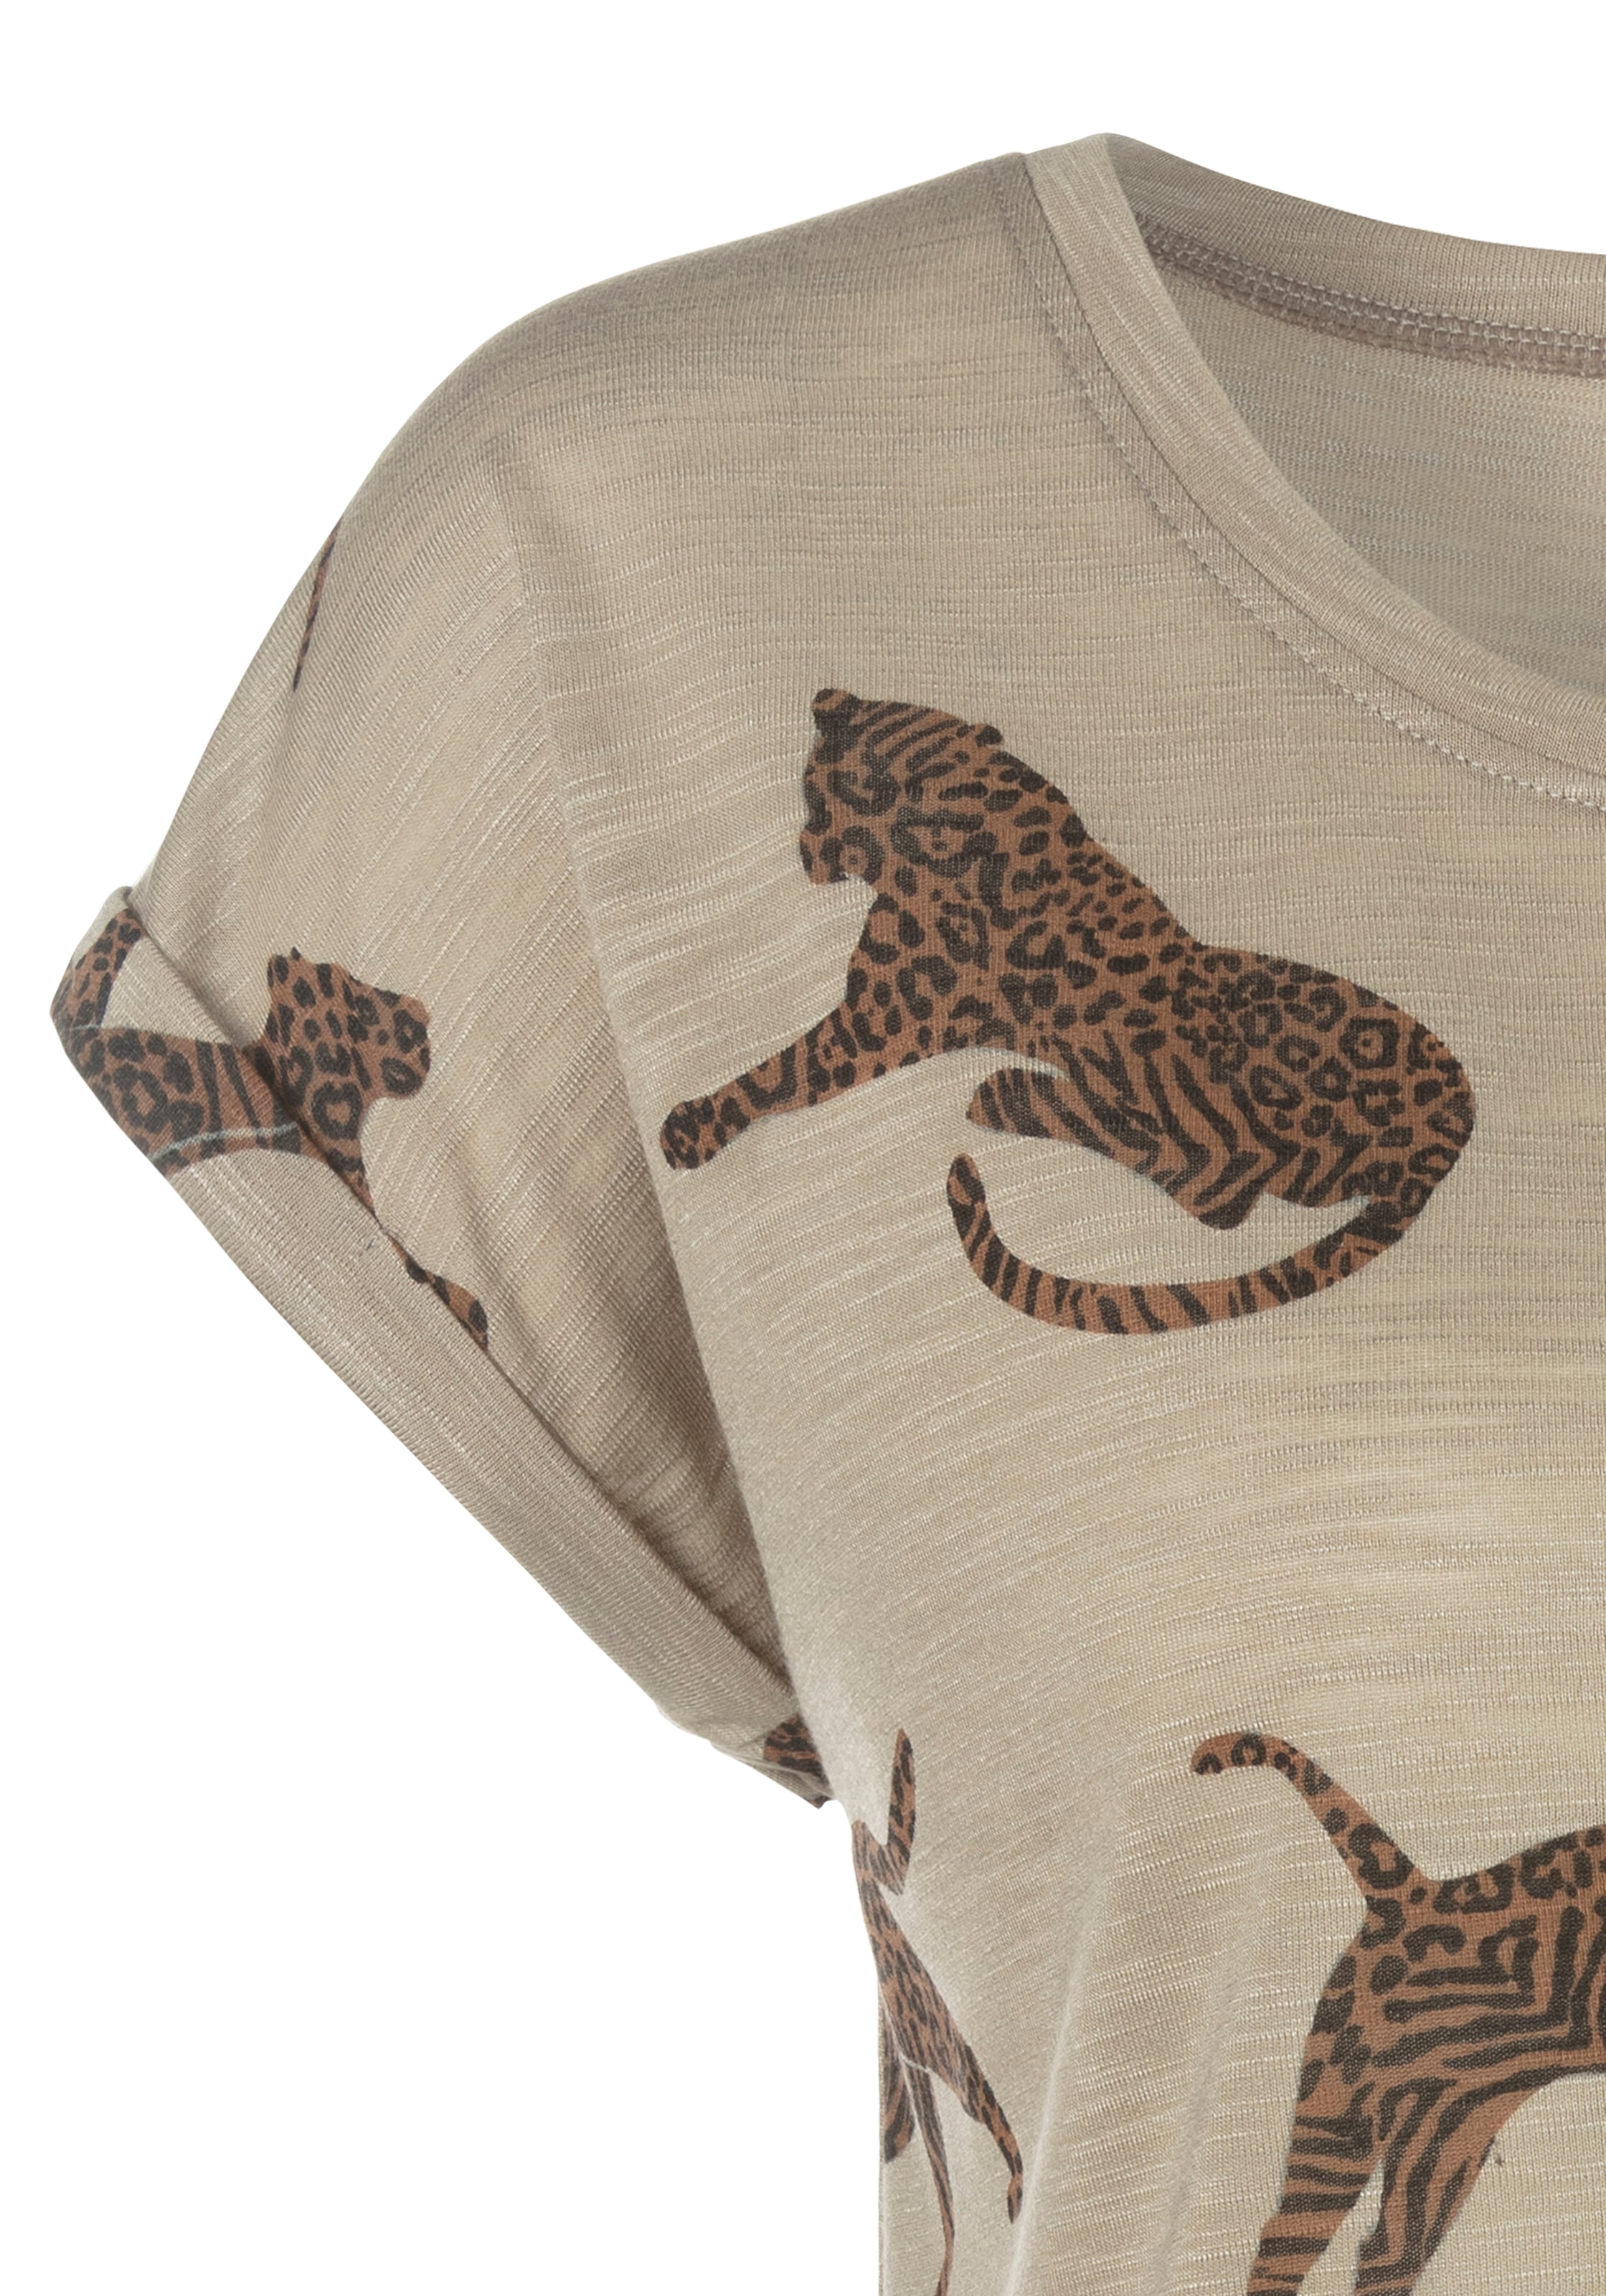 LASCANA Kurzarmshirt, mit online bei Damen Leoparden-Motiv, casual-chic T-Shirt, Passform, lockere